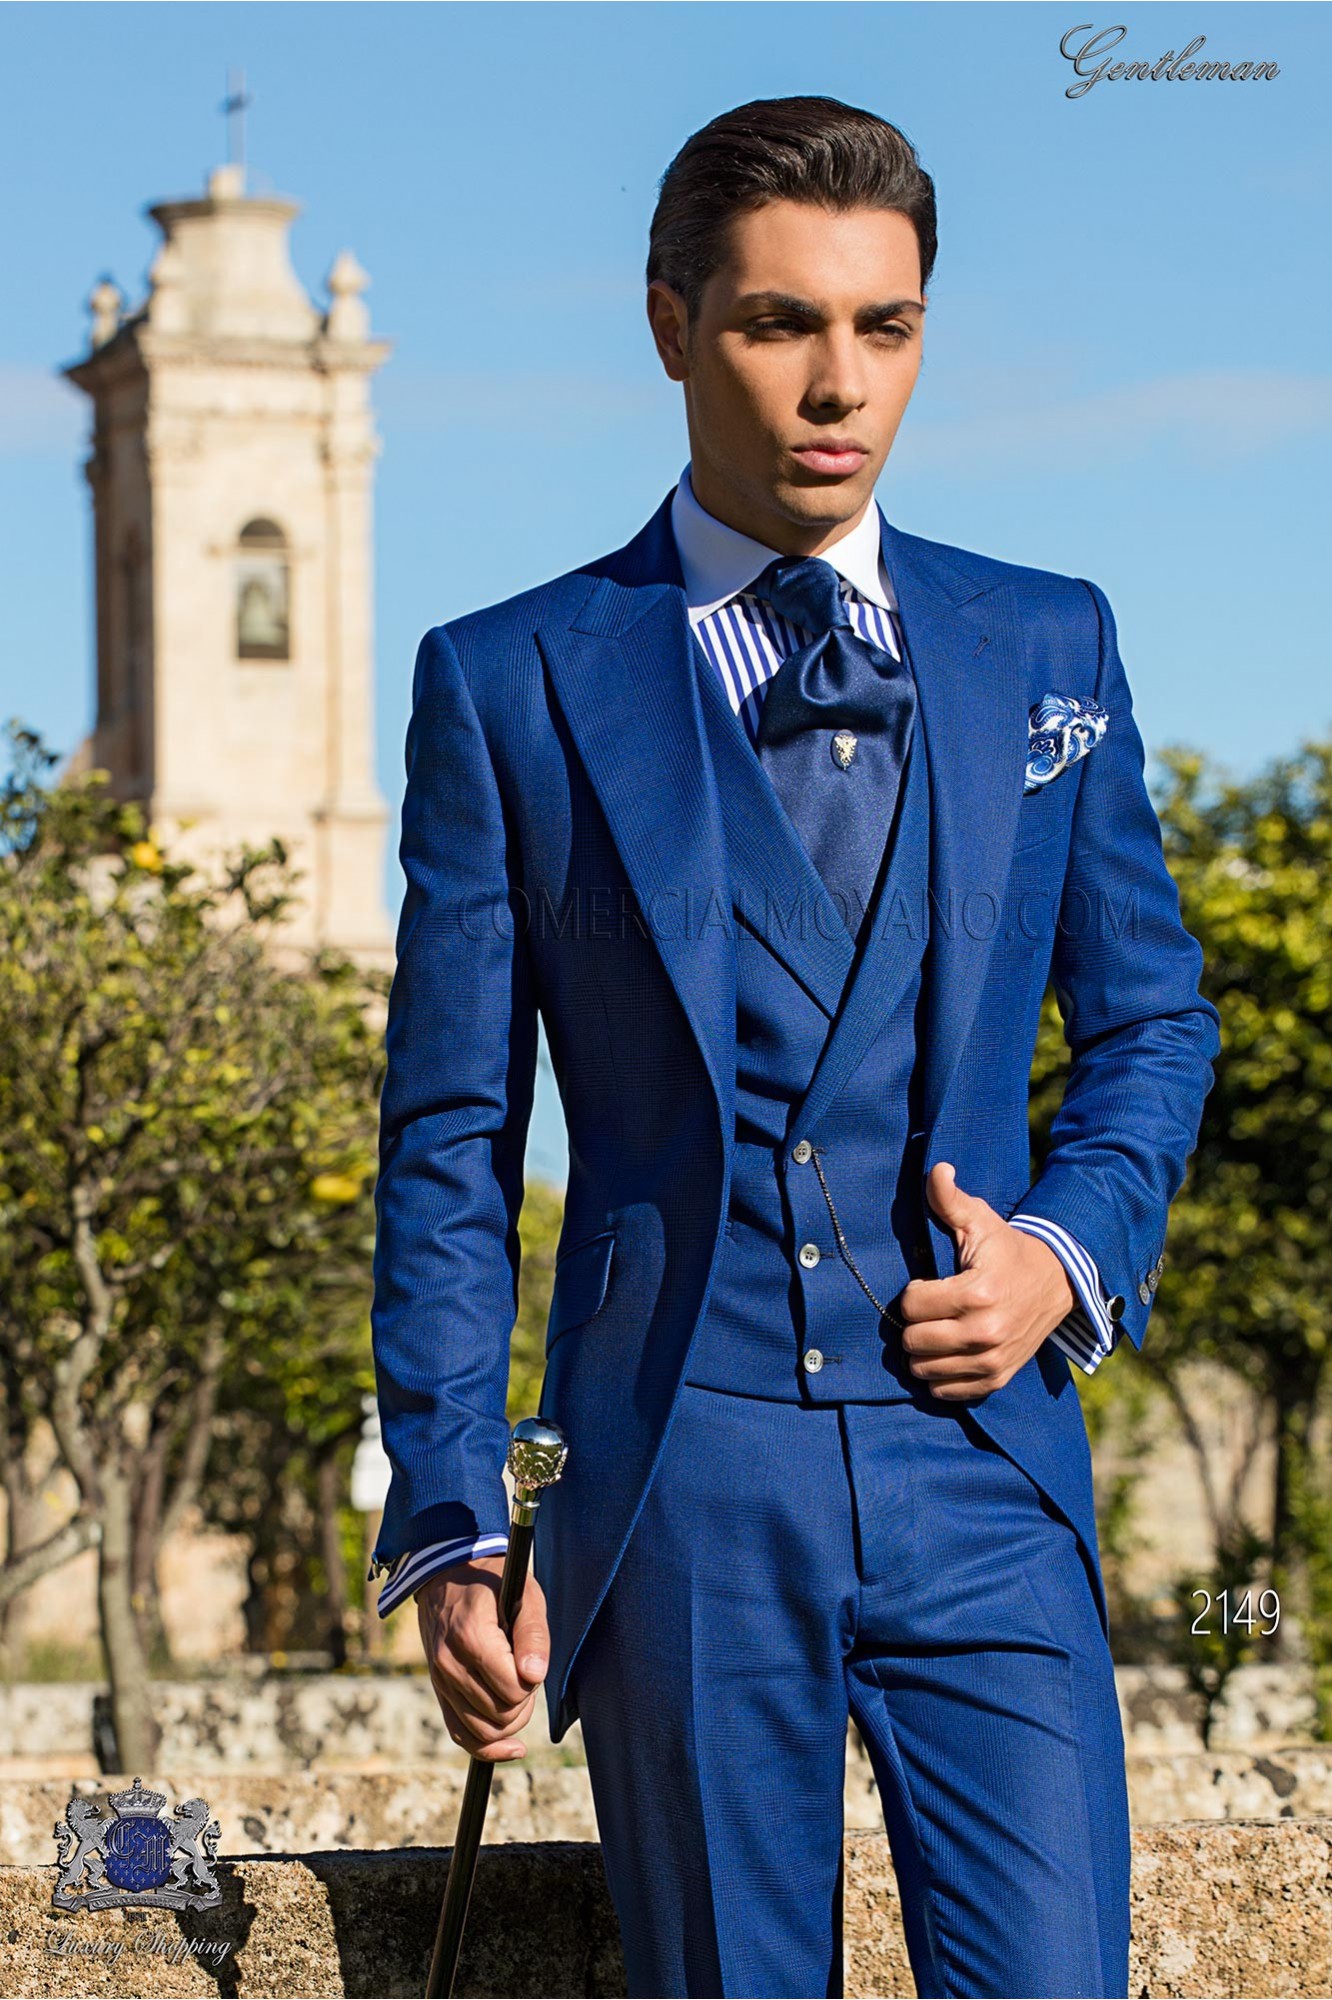 Bespoke Prince of Wales royal blue morning suit model 2149 Mario Moyano